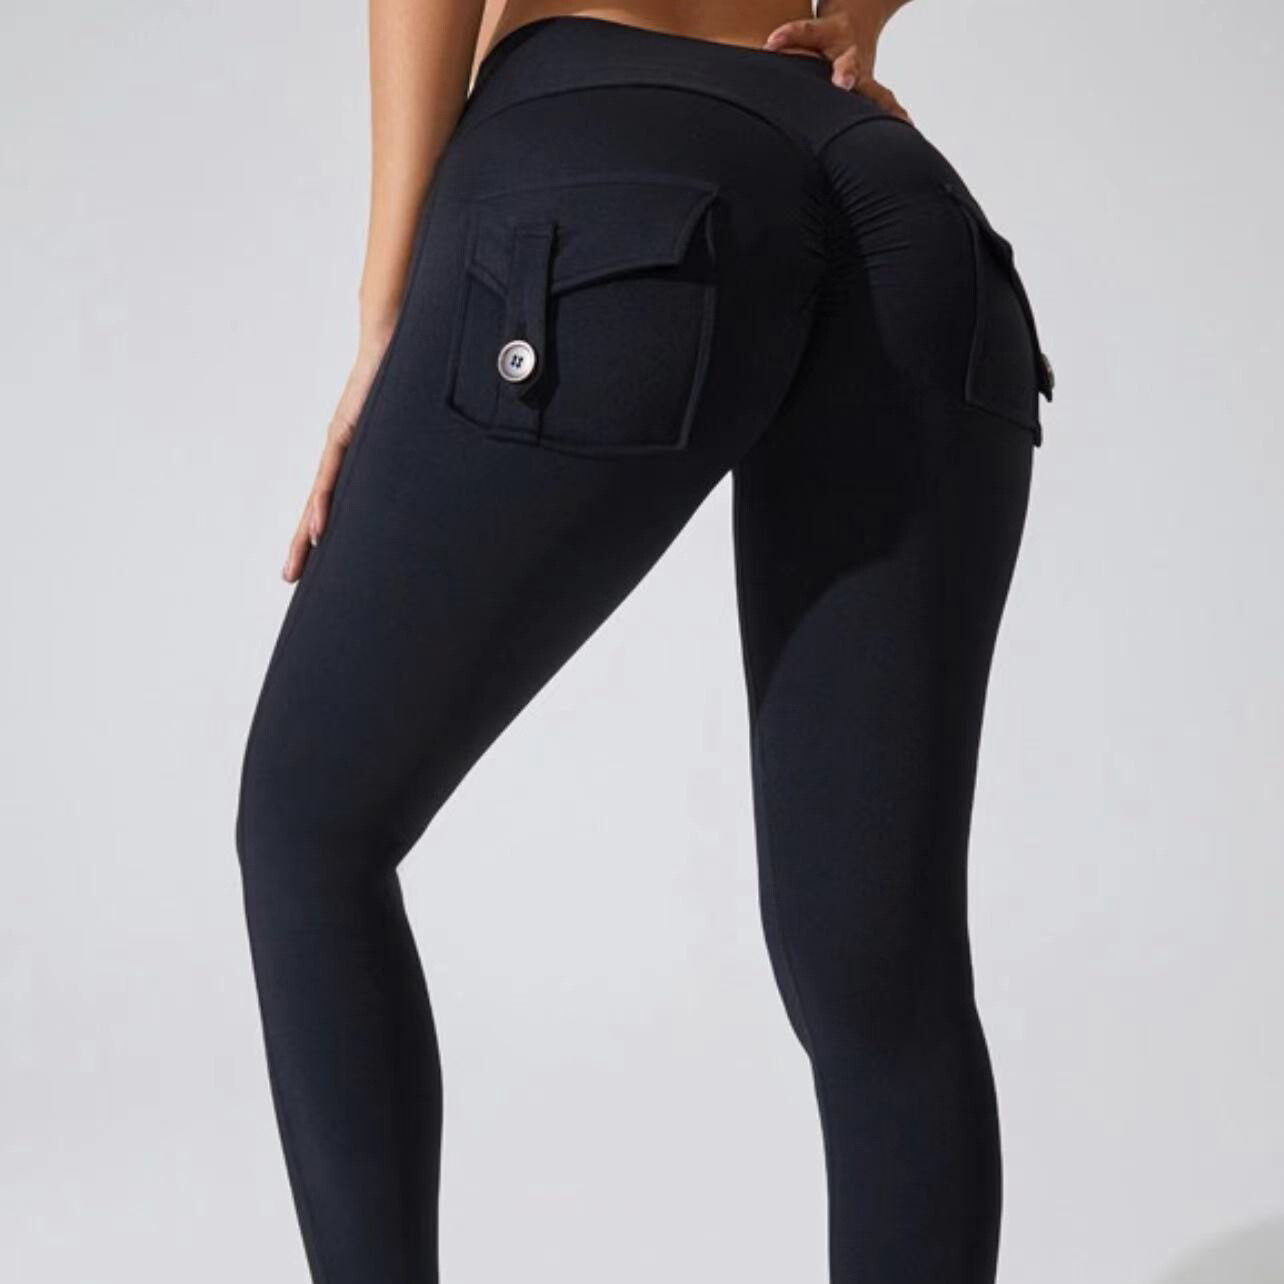 Workwear Pocket Pants Fitness Sports Pants High Waist Hip Yoga Tight Pants, Color: Black, Size: S